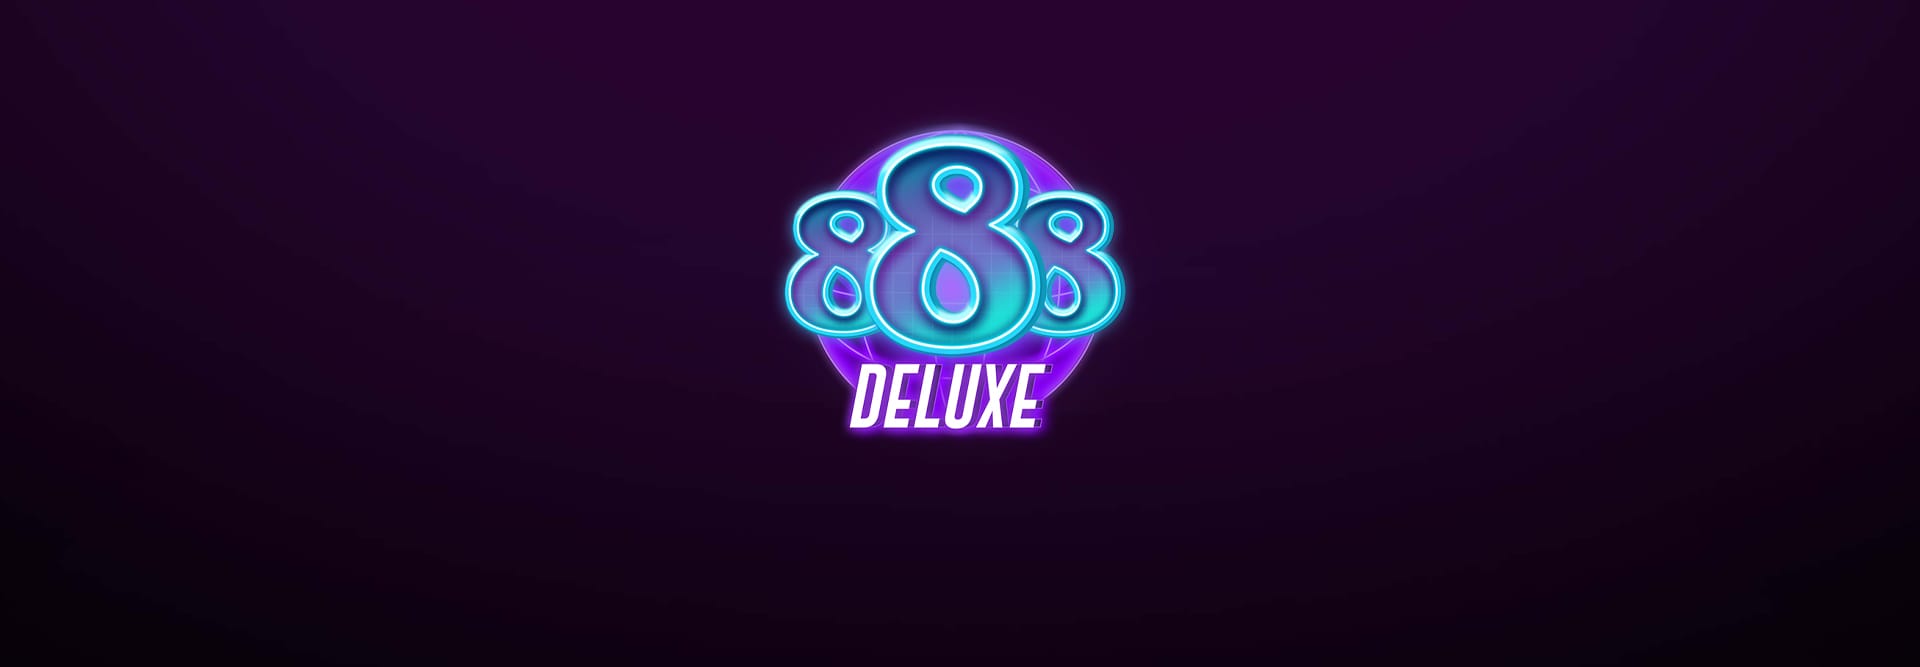 888 deluxe logo